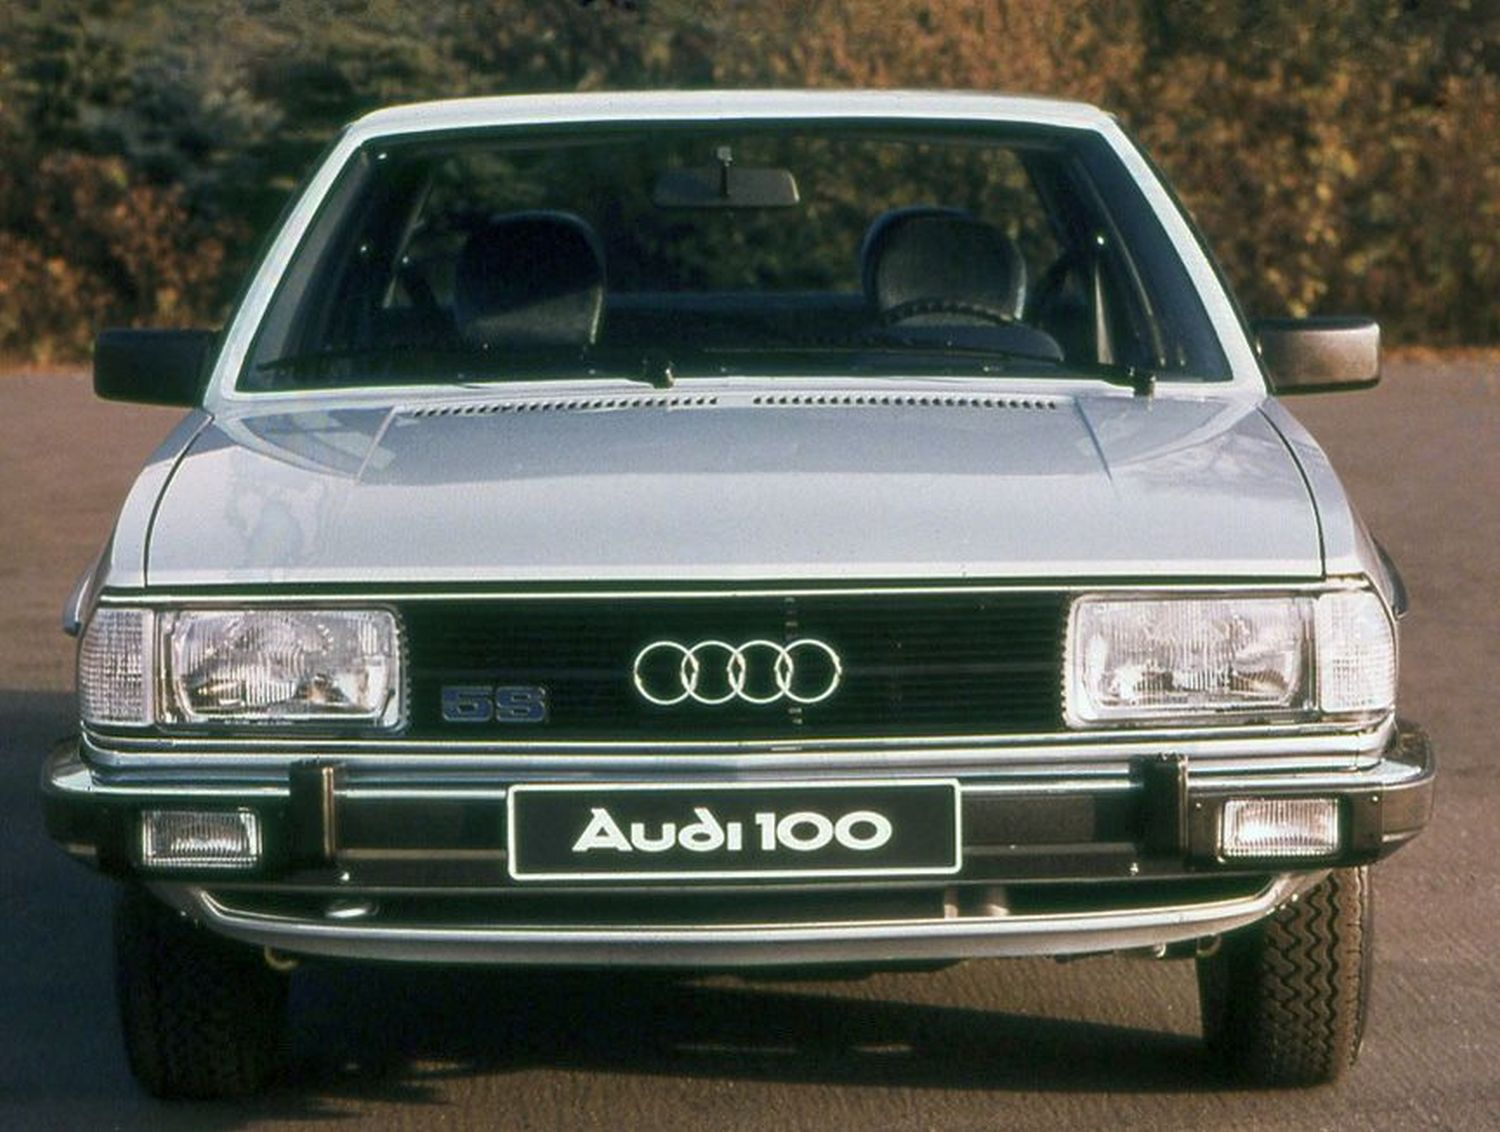 Ауди первого поколения. Ауди 100 5s. Ауди 100 кватро. Ауди 100 c2. Audi 100 II (c2).